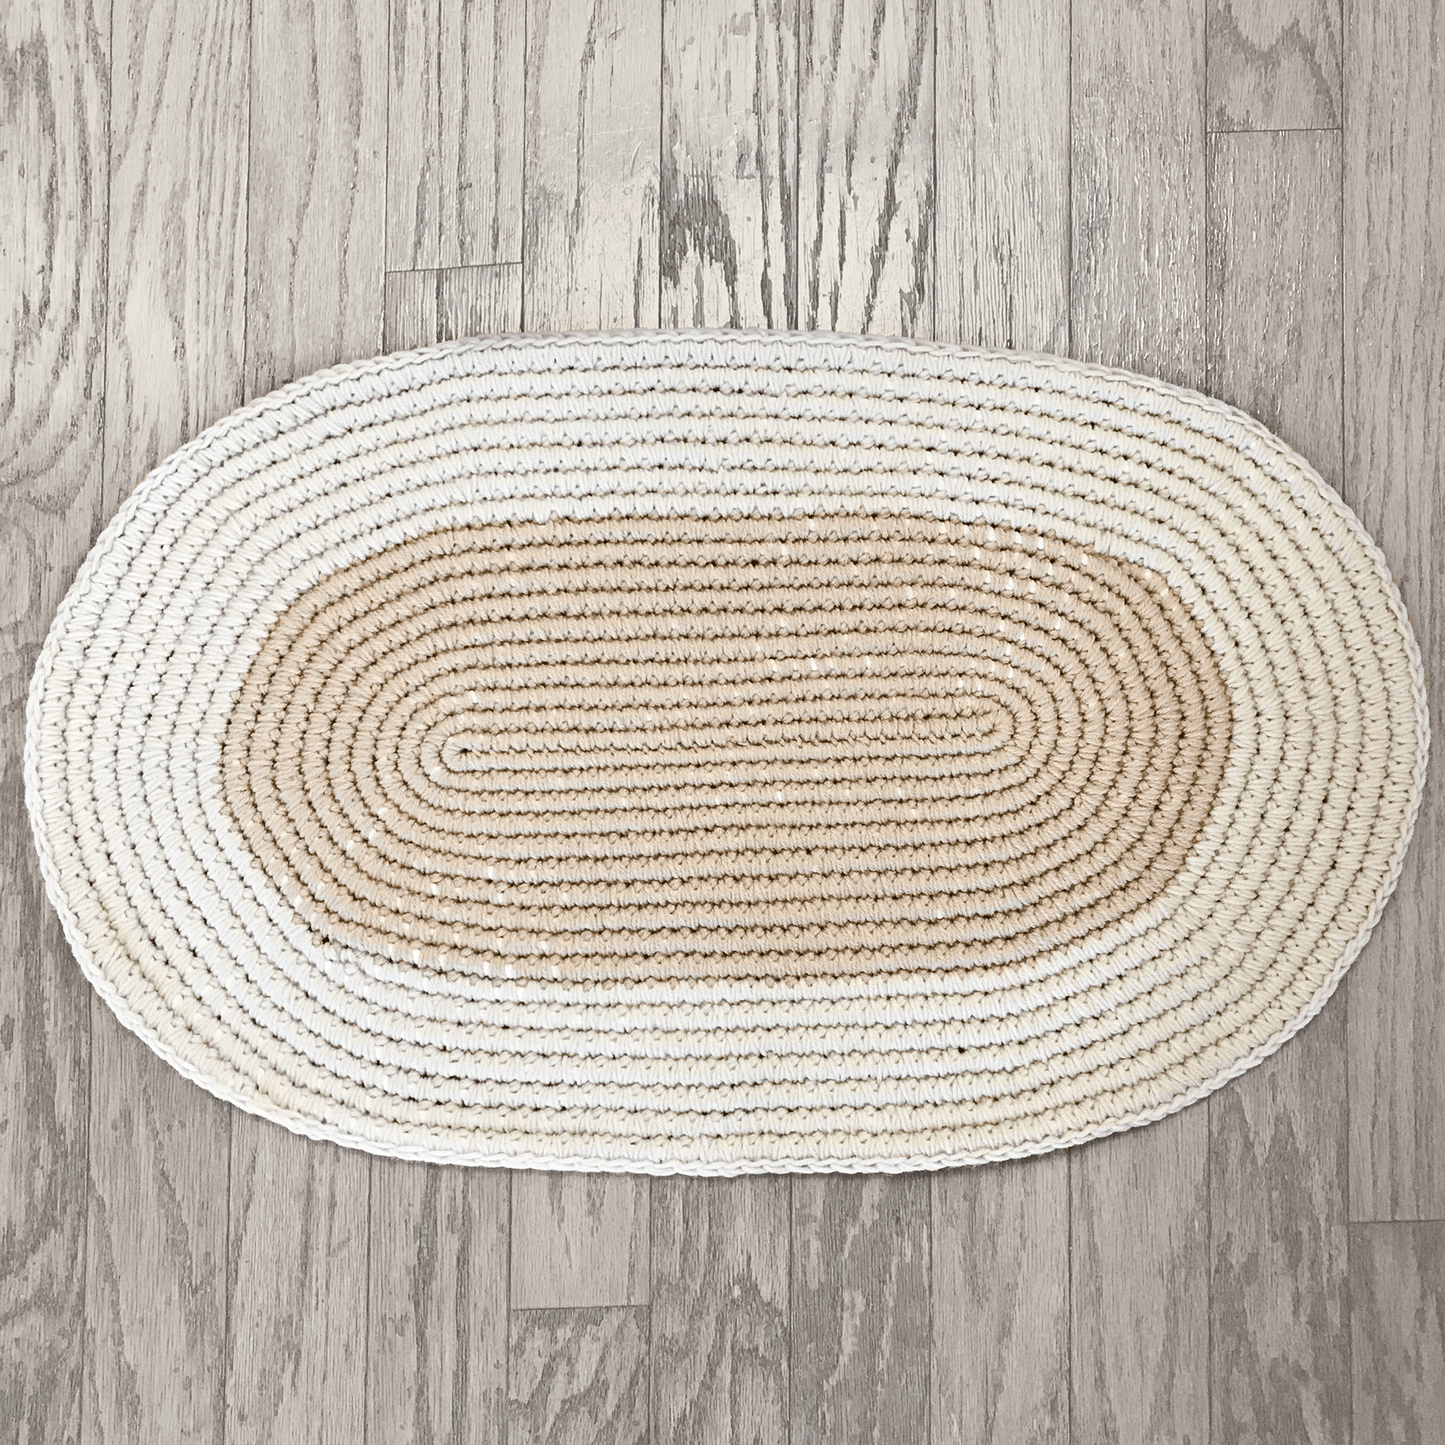 Oval Cord Mat | Crochet Pattern